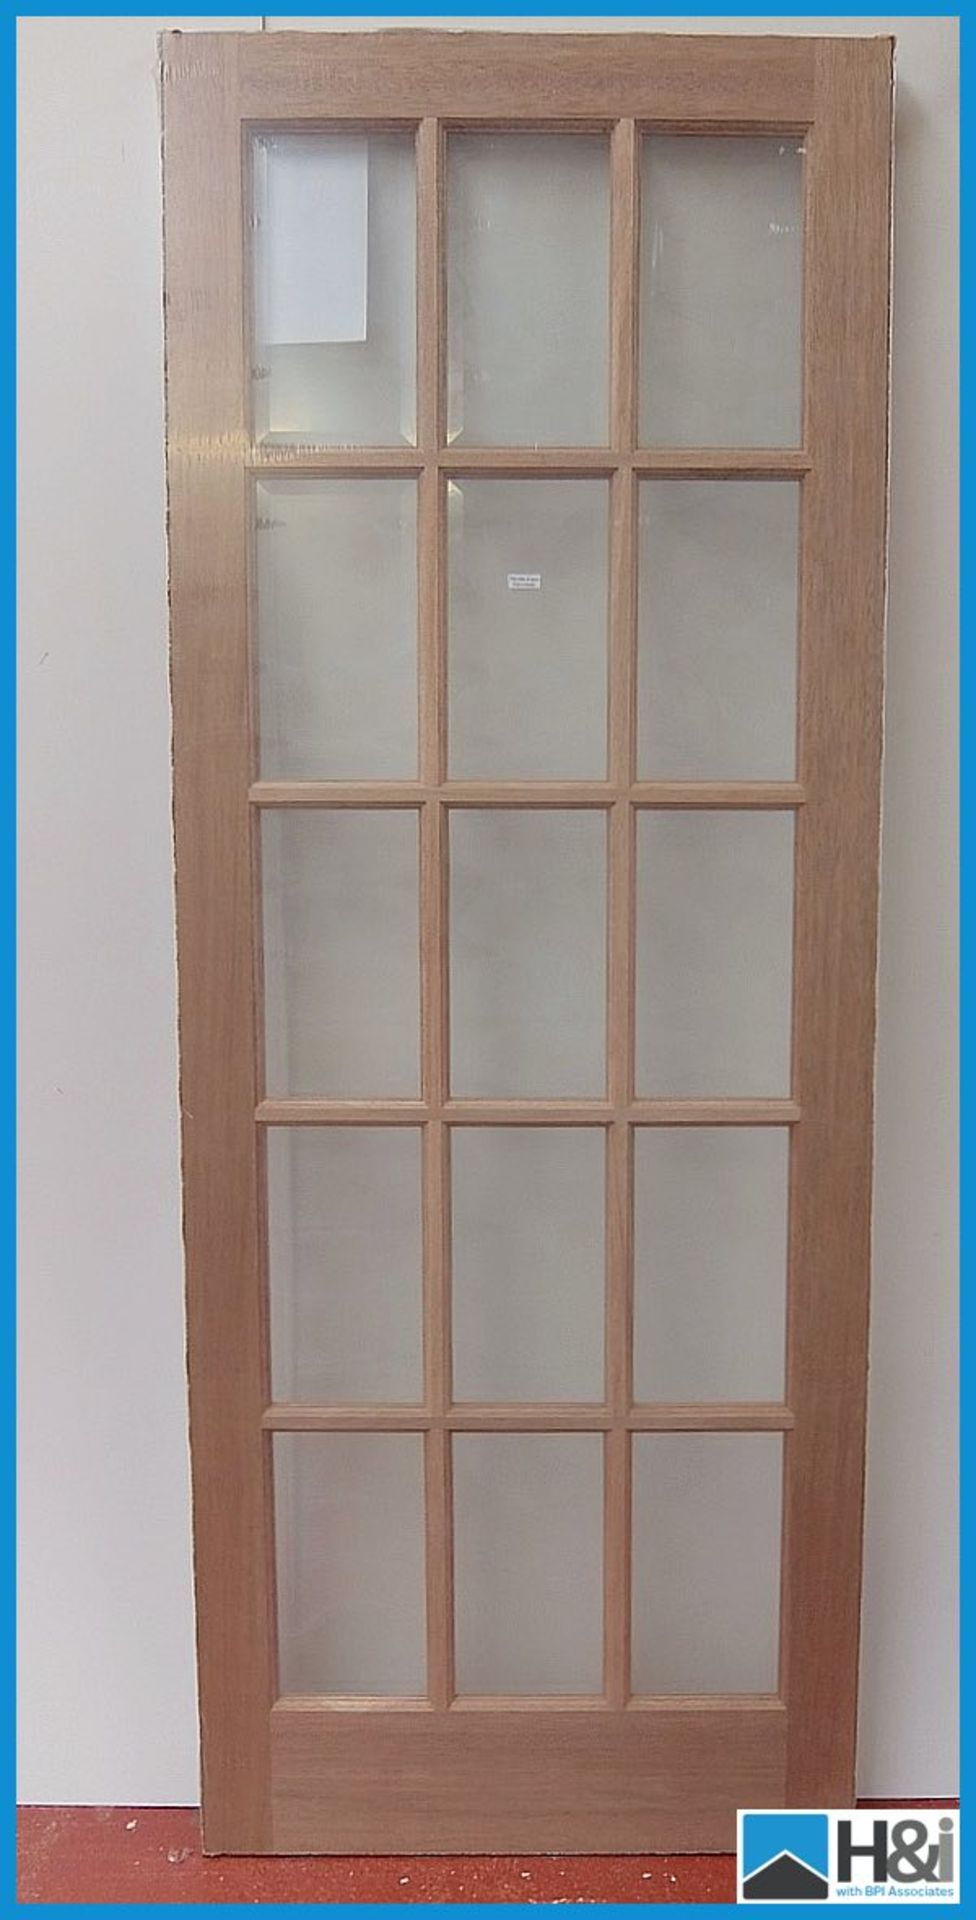 2ft 6in (78x30") SA internal hardwood SA77 15 pane clear bevelled glass internal door doors.